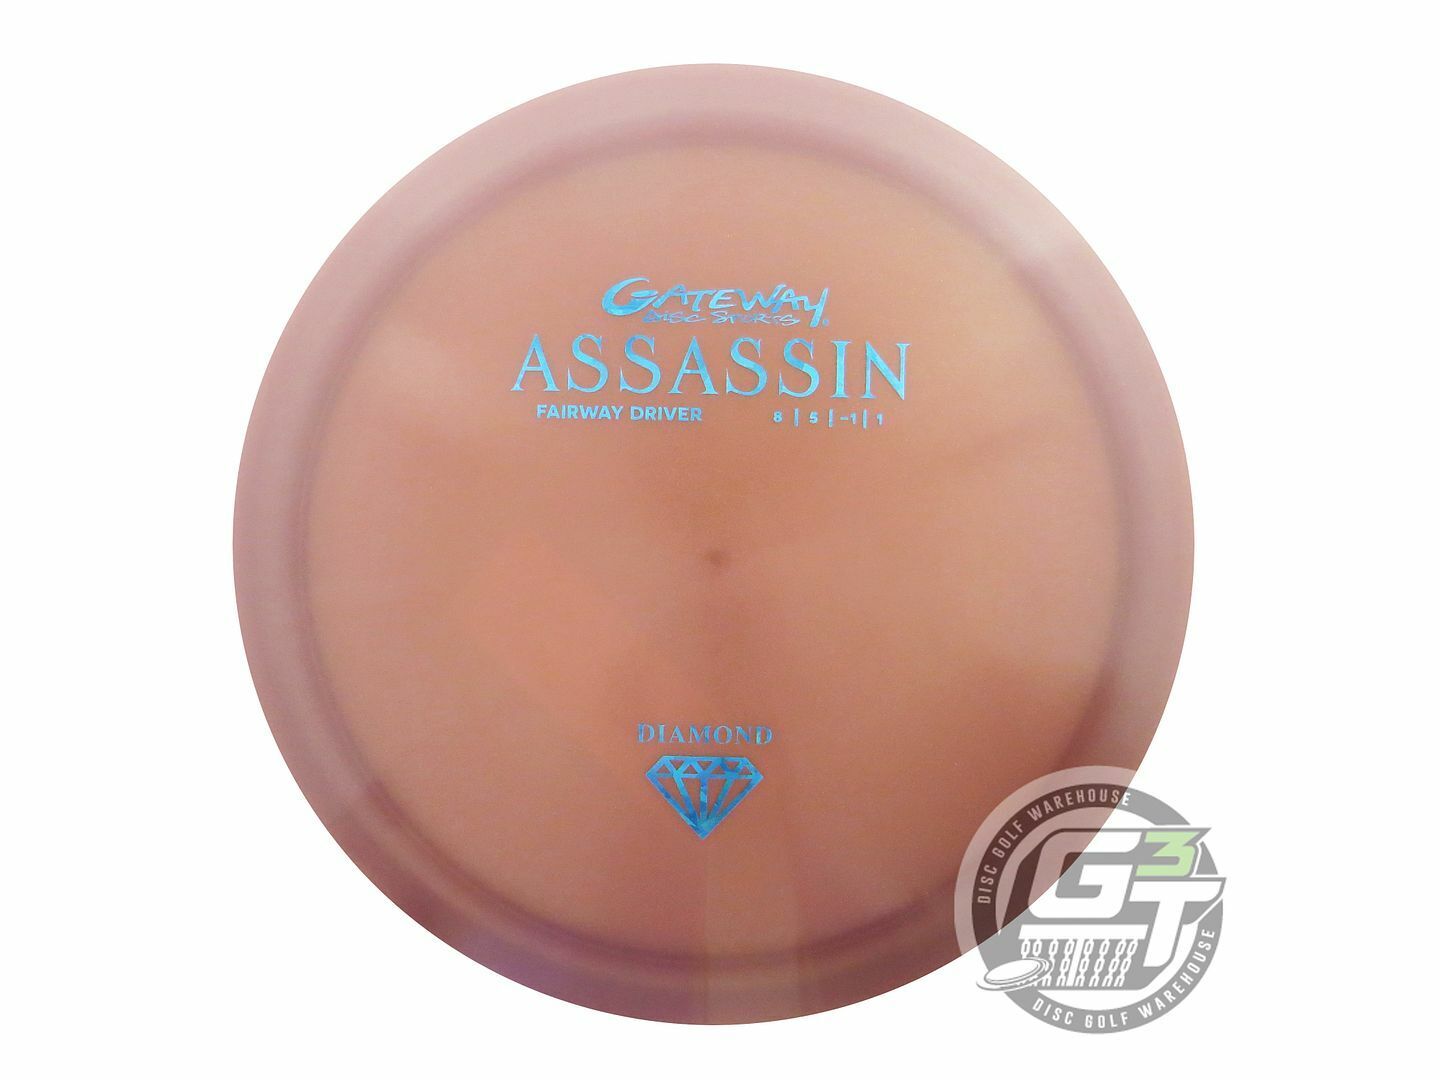 Gateway Diamond Assassin Fairway Driver Golf Disc (Individually Listed)